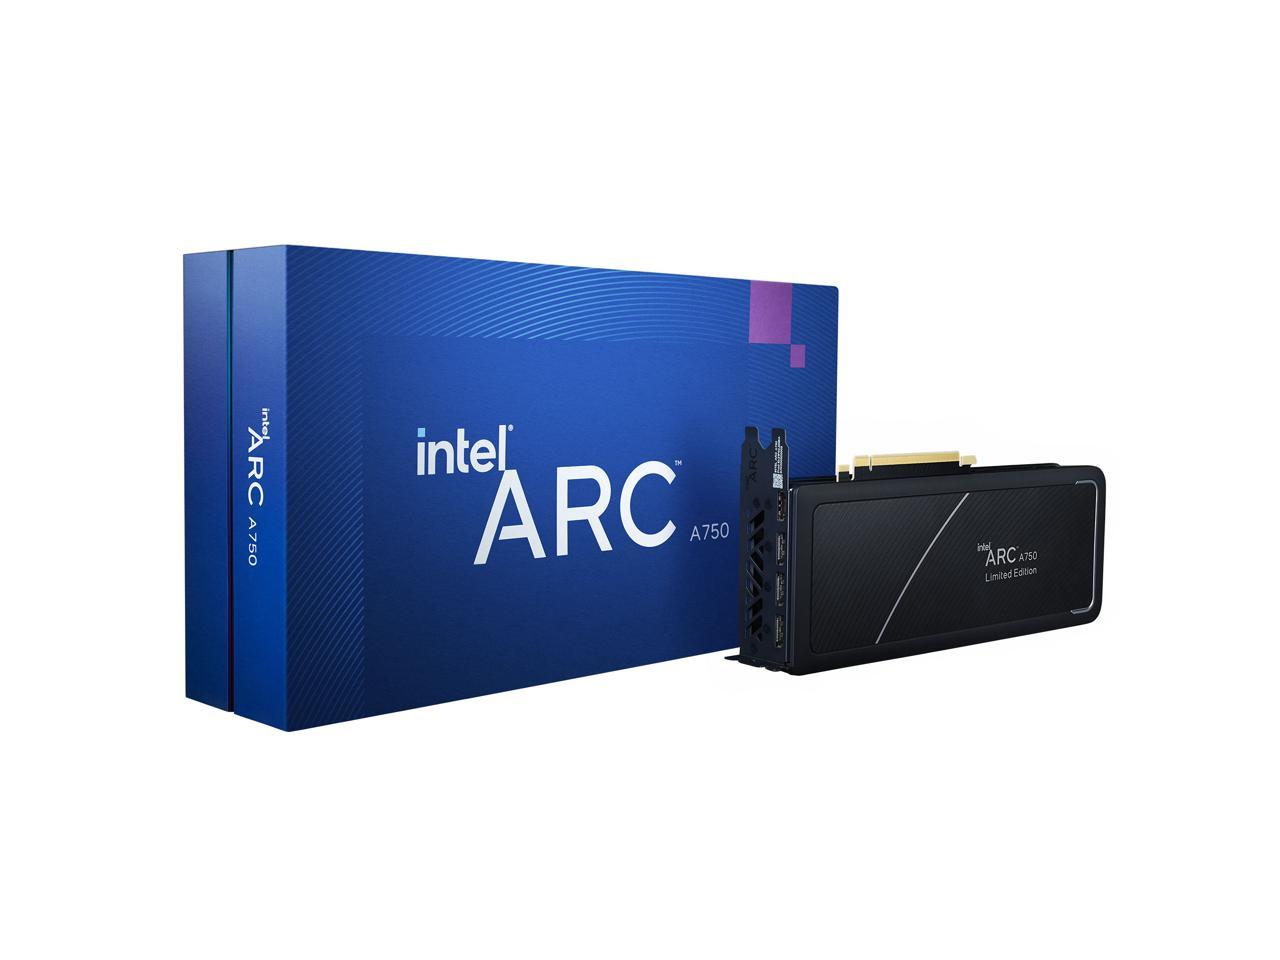 新品未開封 Intel Arc A750 Limited Edition 8GB